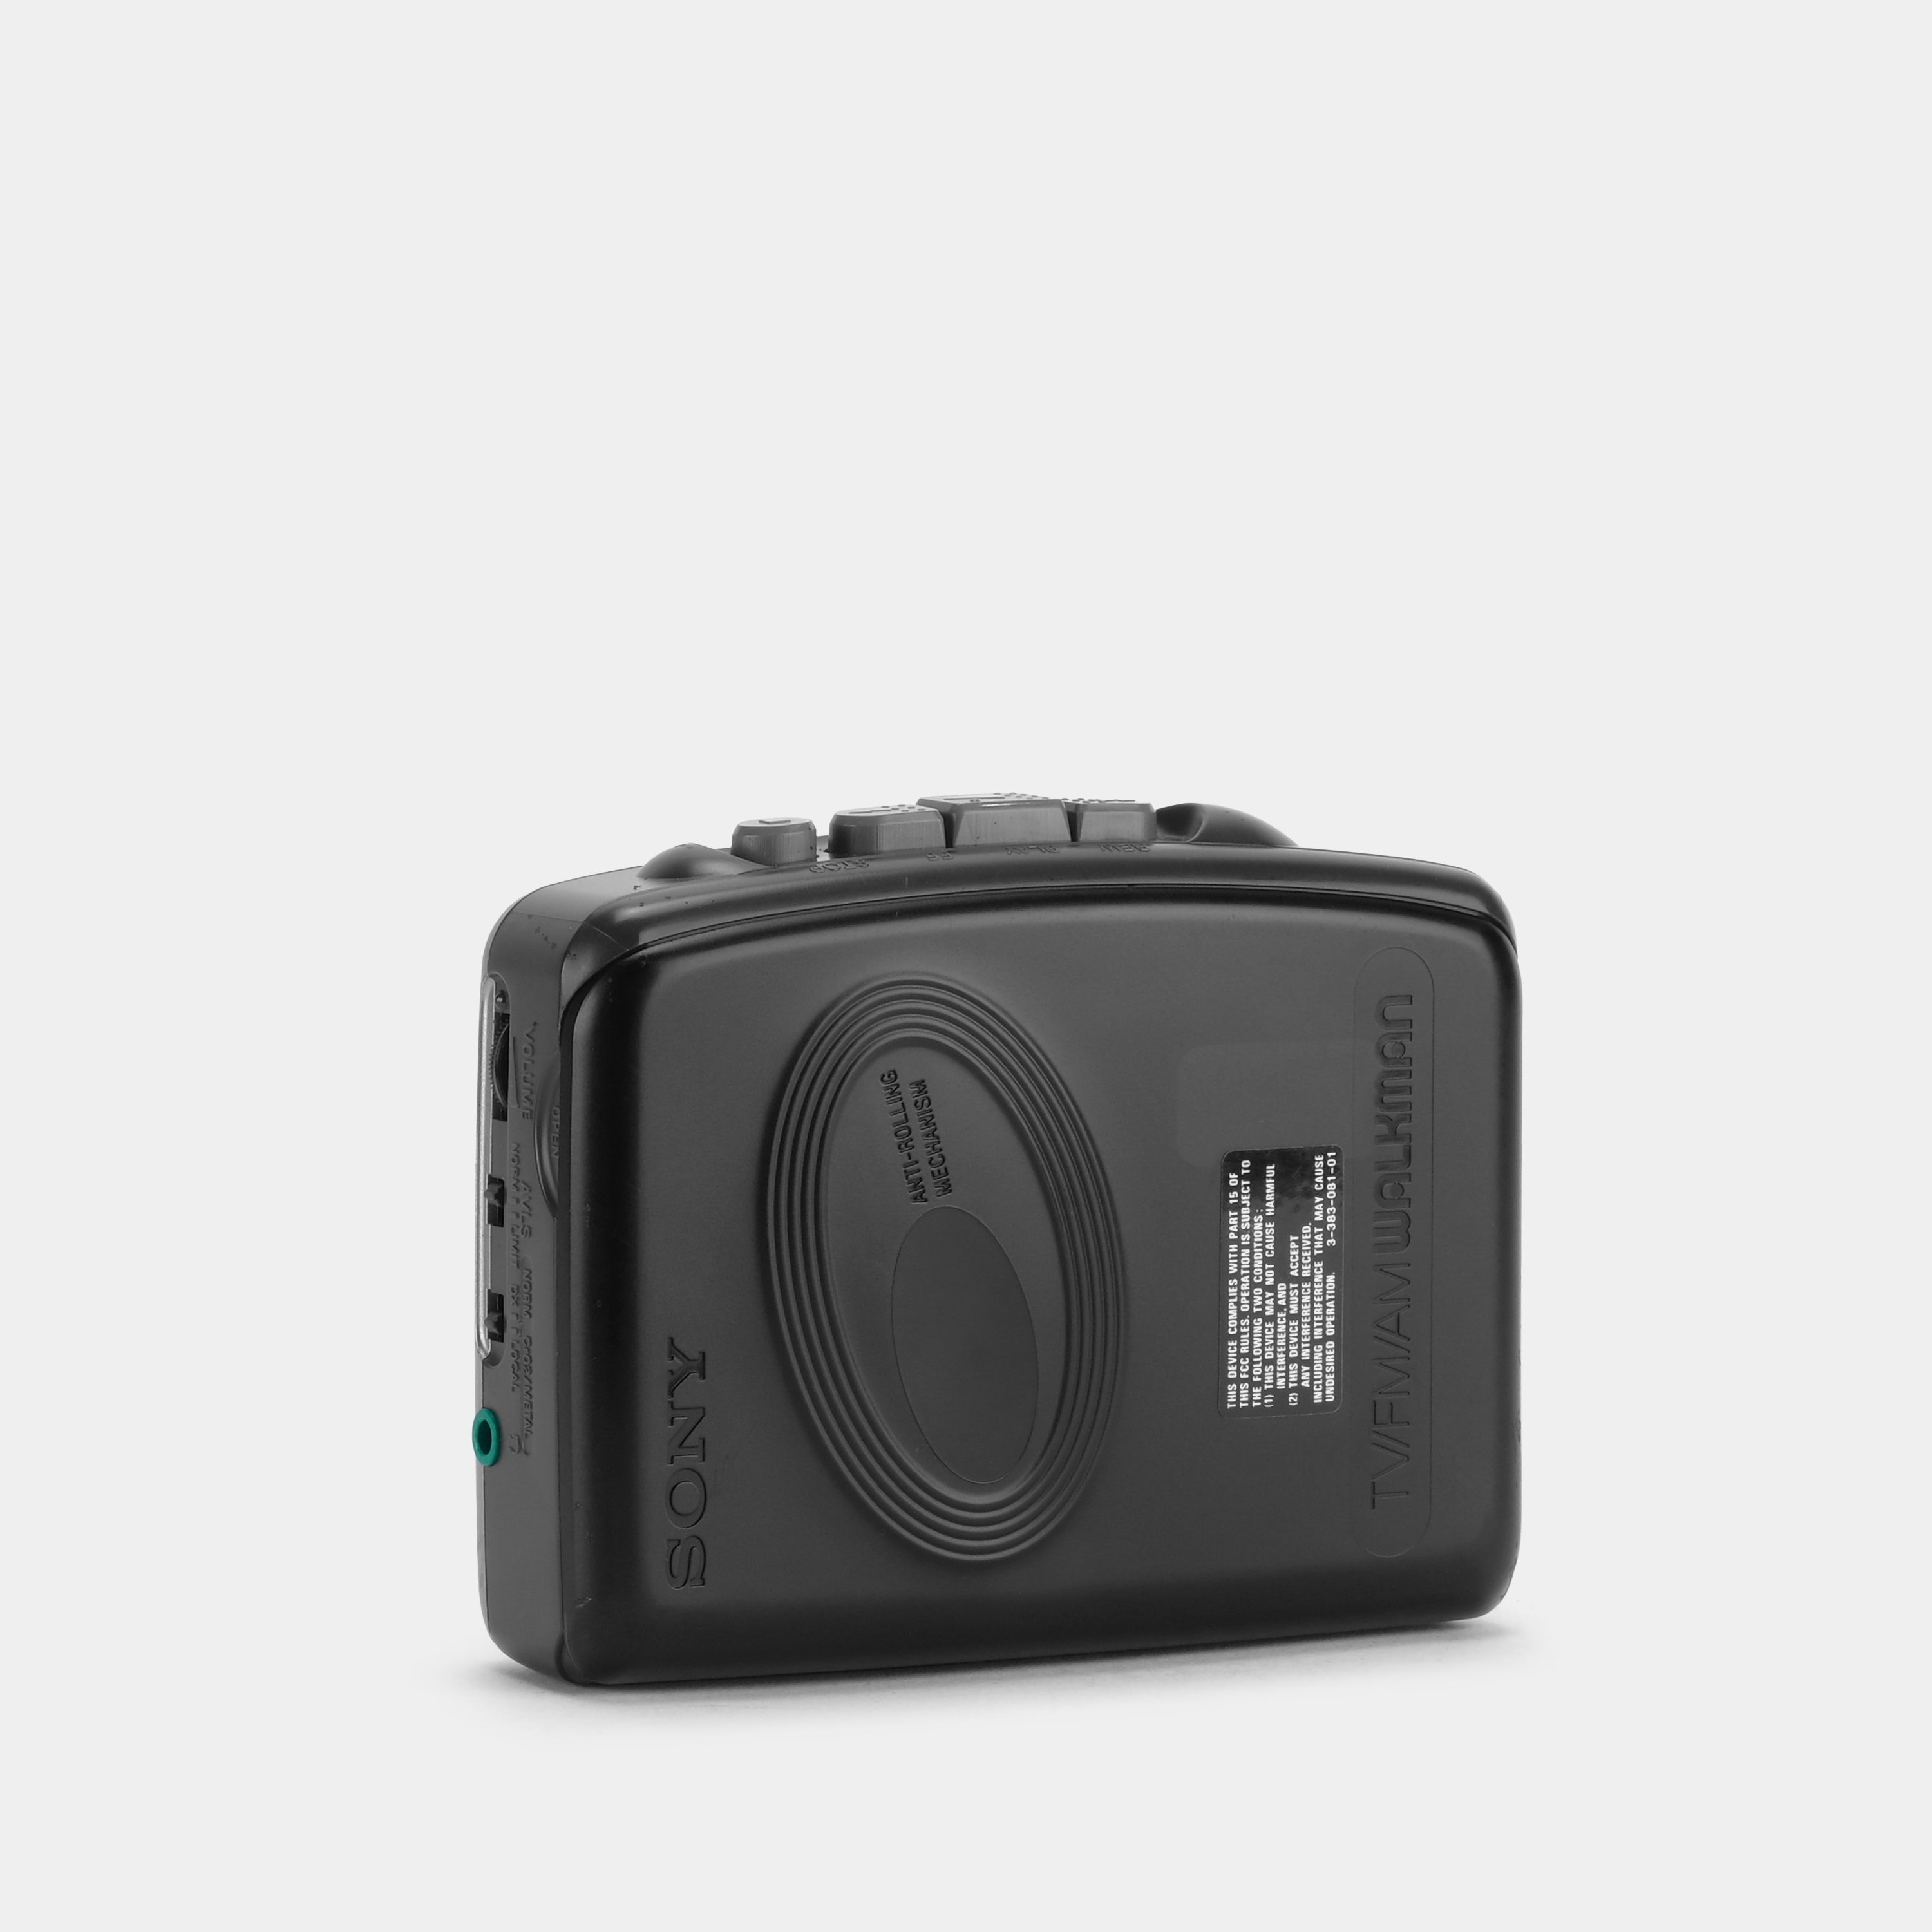 Sony Walkman WM-FX277 Purple Portable Cassette Player with Case